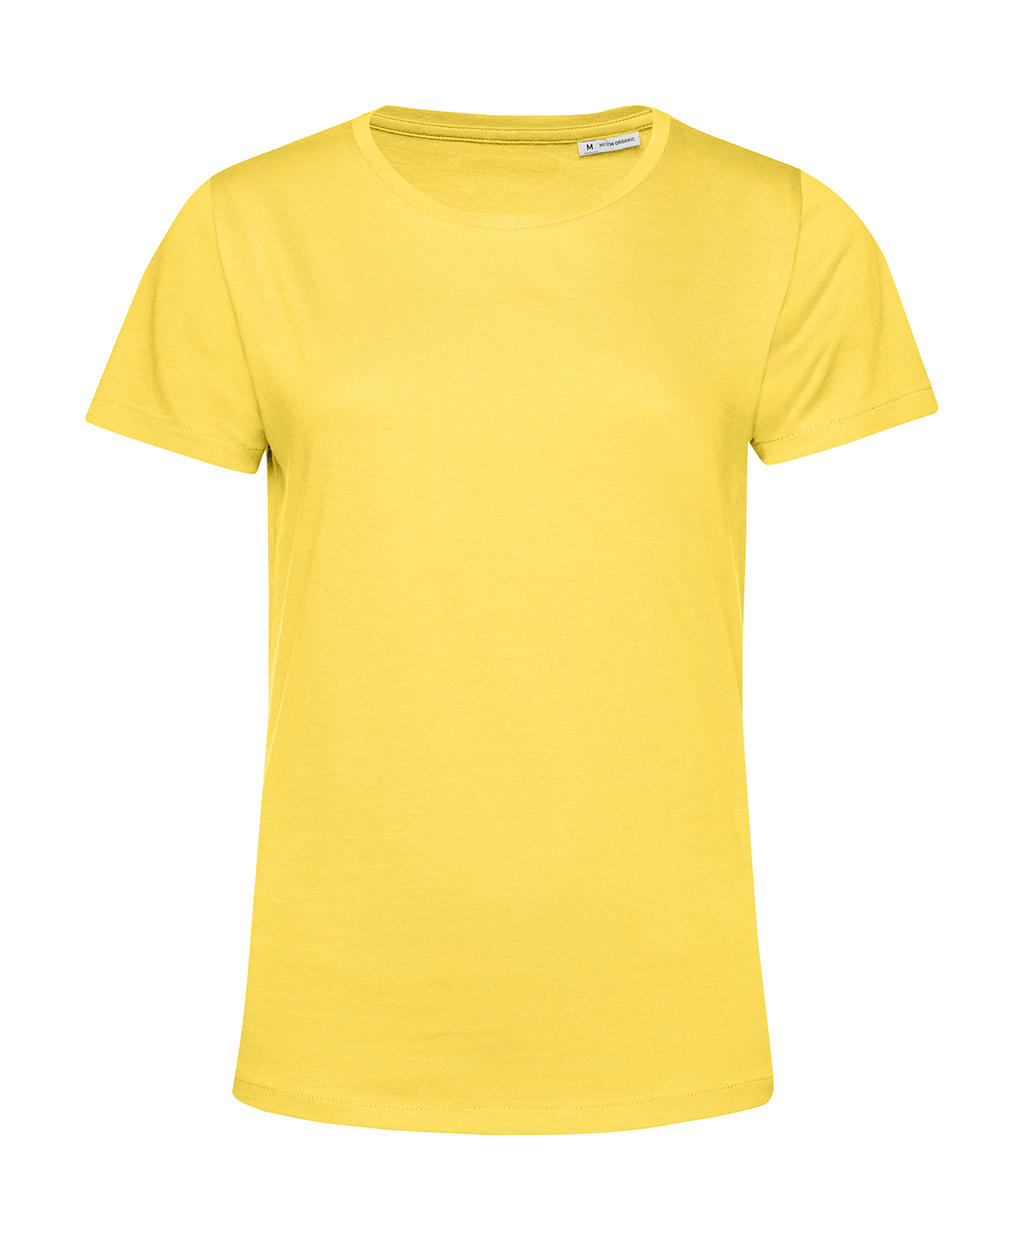 Tričko dámské BC Organic Inspire E150 - žluté, S